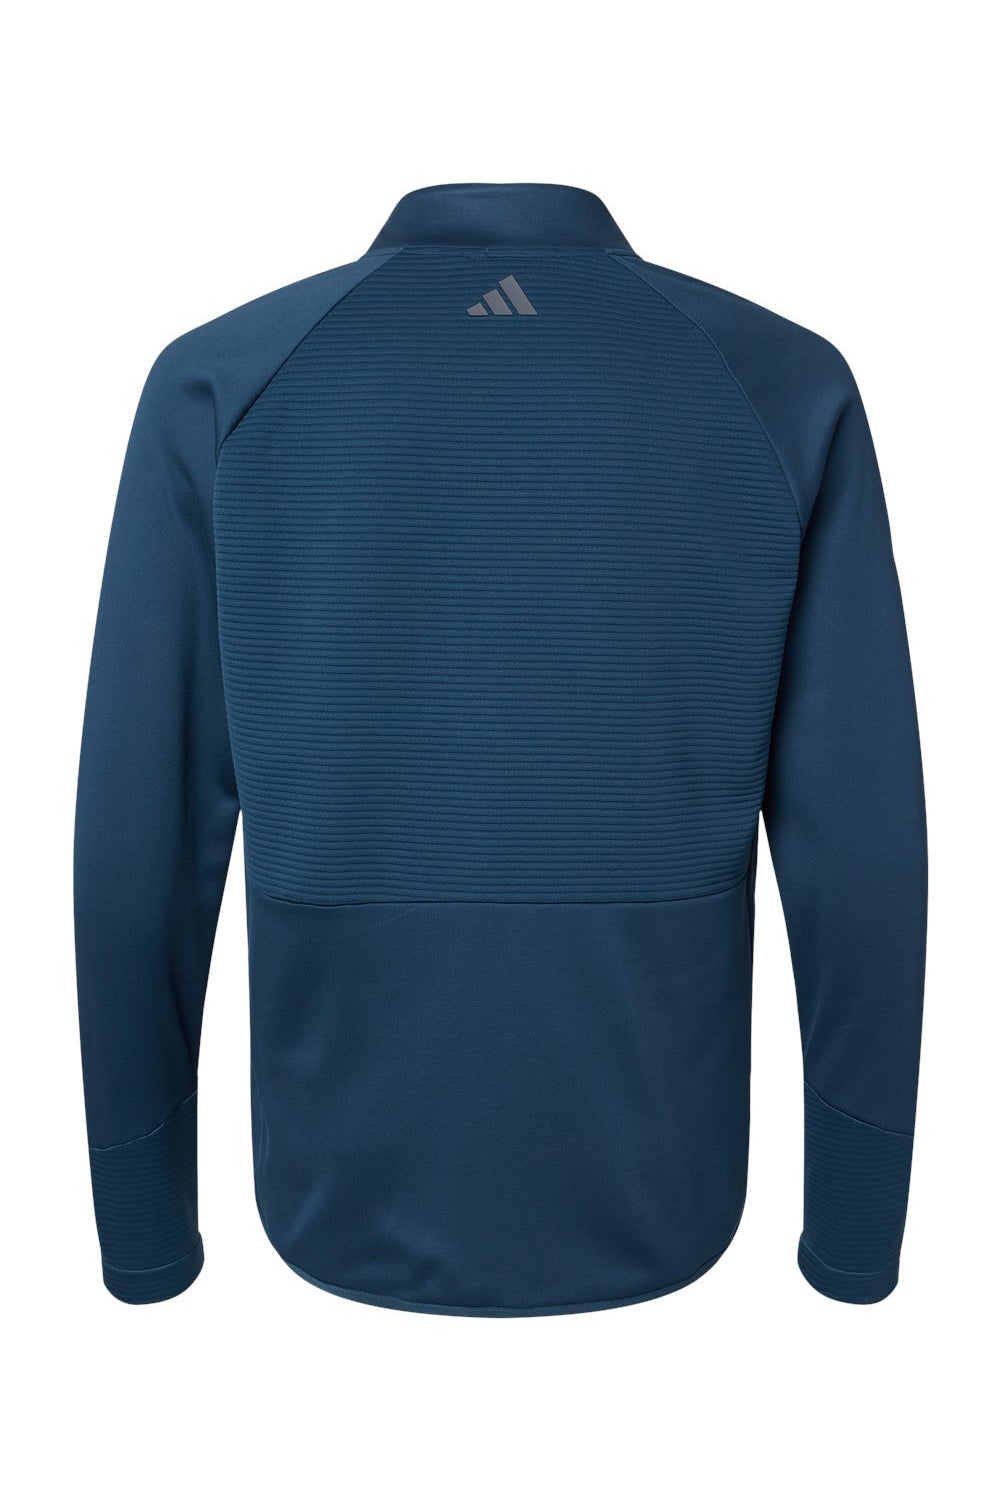 Adidas A587 Mens 1/4 Zip Sweatshirt Crew Navy Blue Flat Back